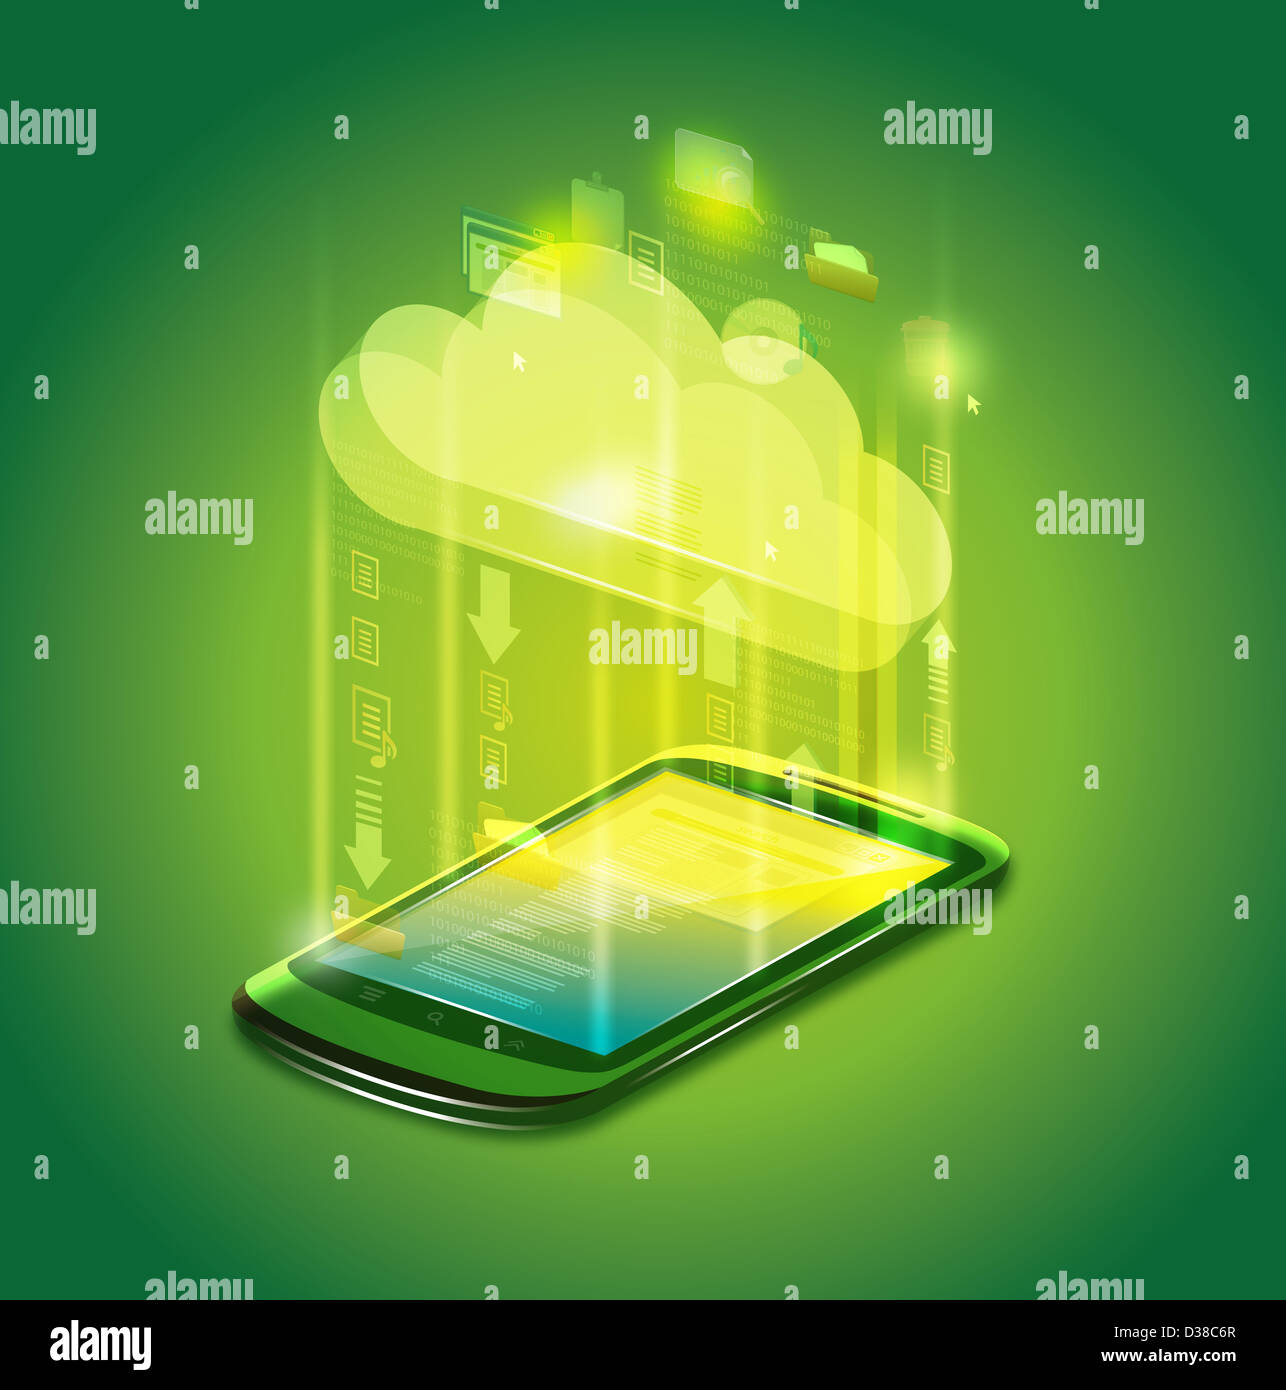 Illustrative image of mobile phone representing cloud computing Stock Photo